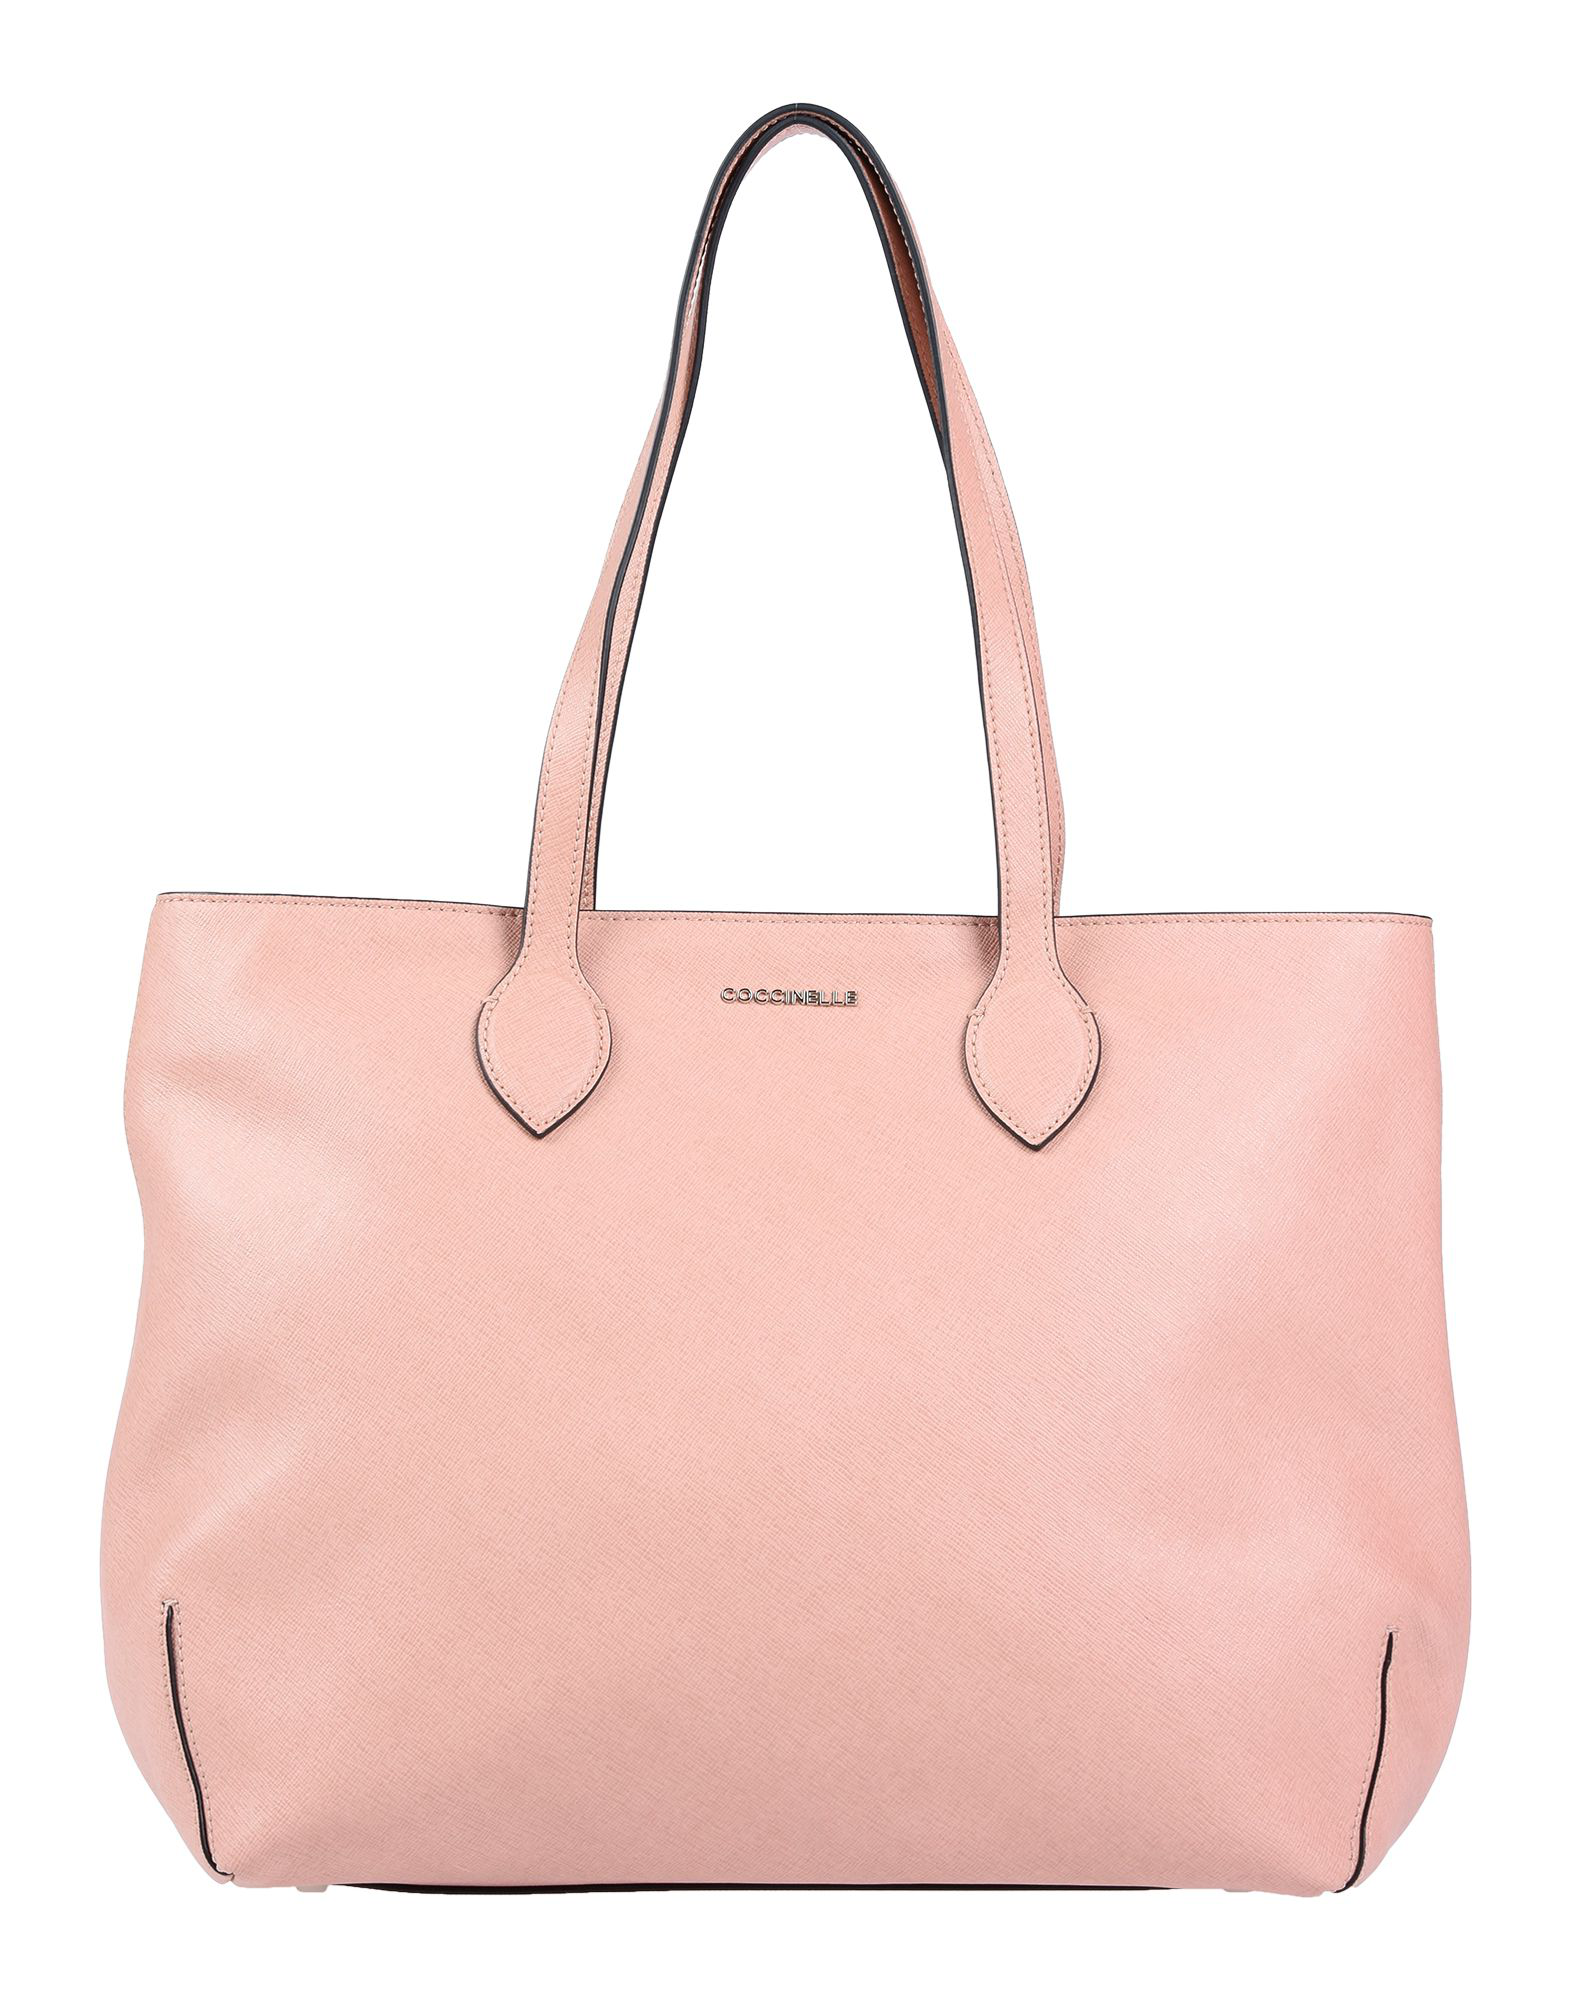 Coccinelle Handbag In Pastel Pink | ModeSens